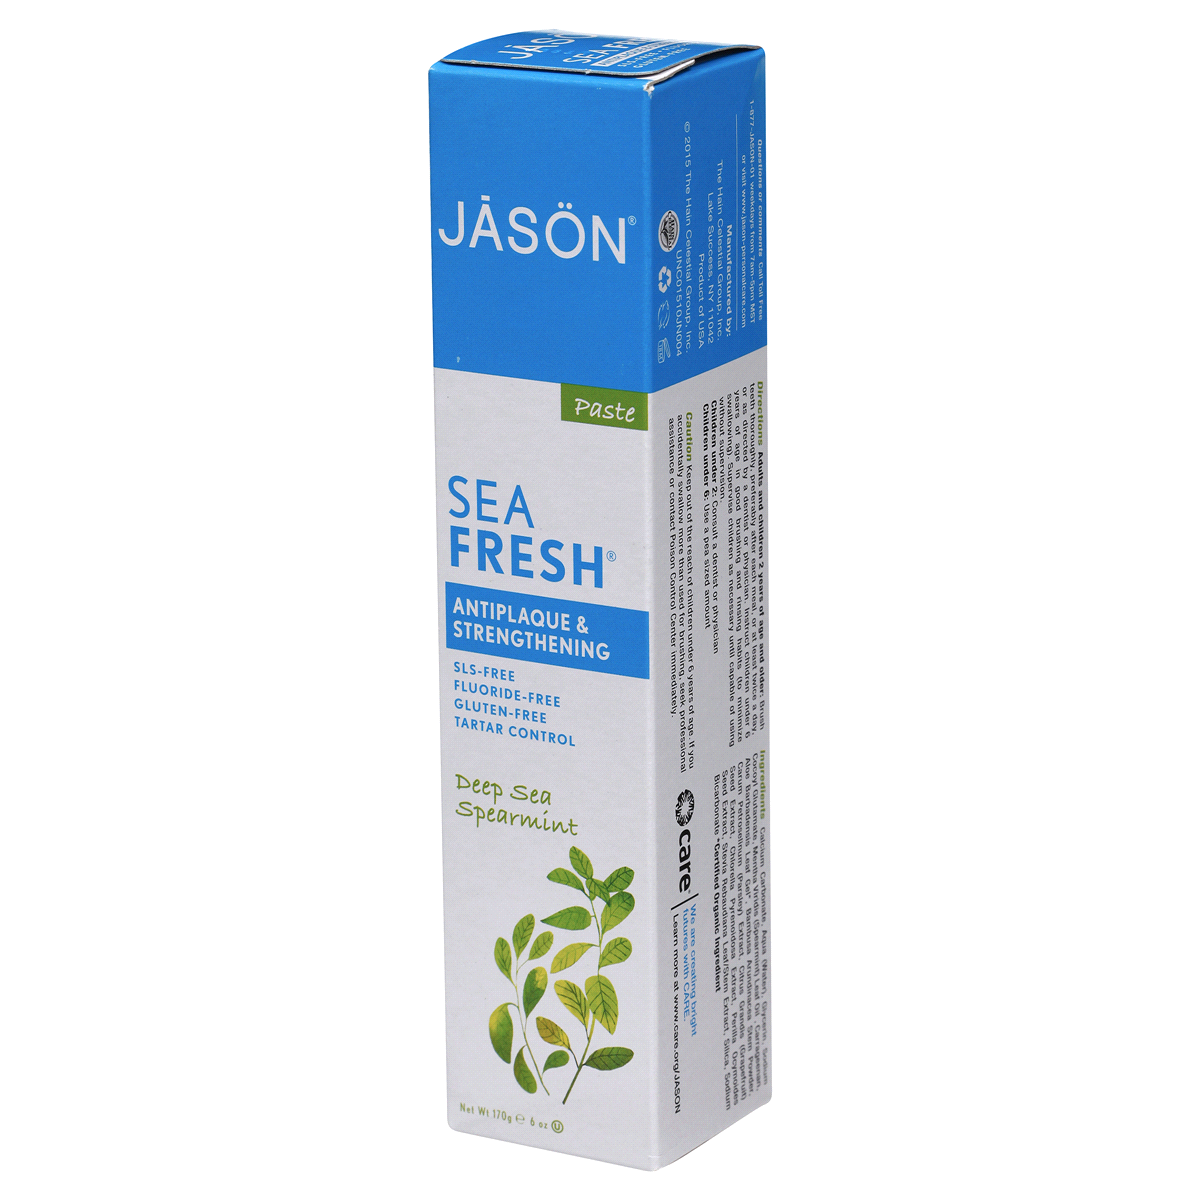 slide 7 of 7, Jason JĀSON Sea Fresh Deep Sea Spearmint Strengthening Toothpaste 6 oz. Box, 6 oz